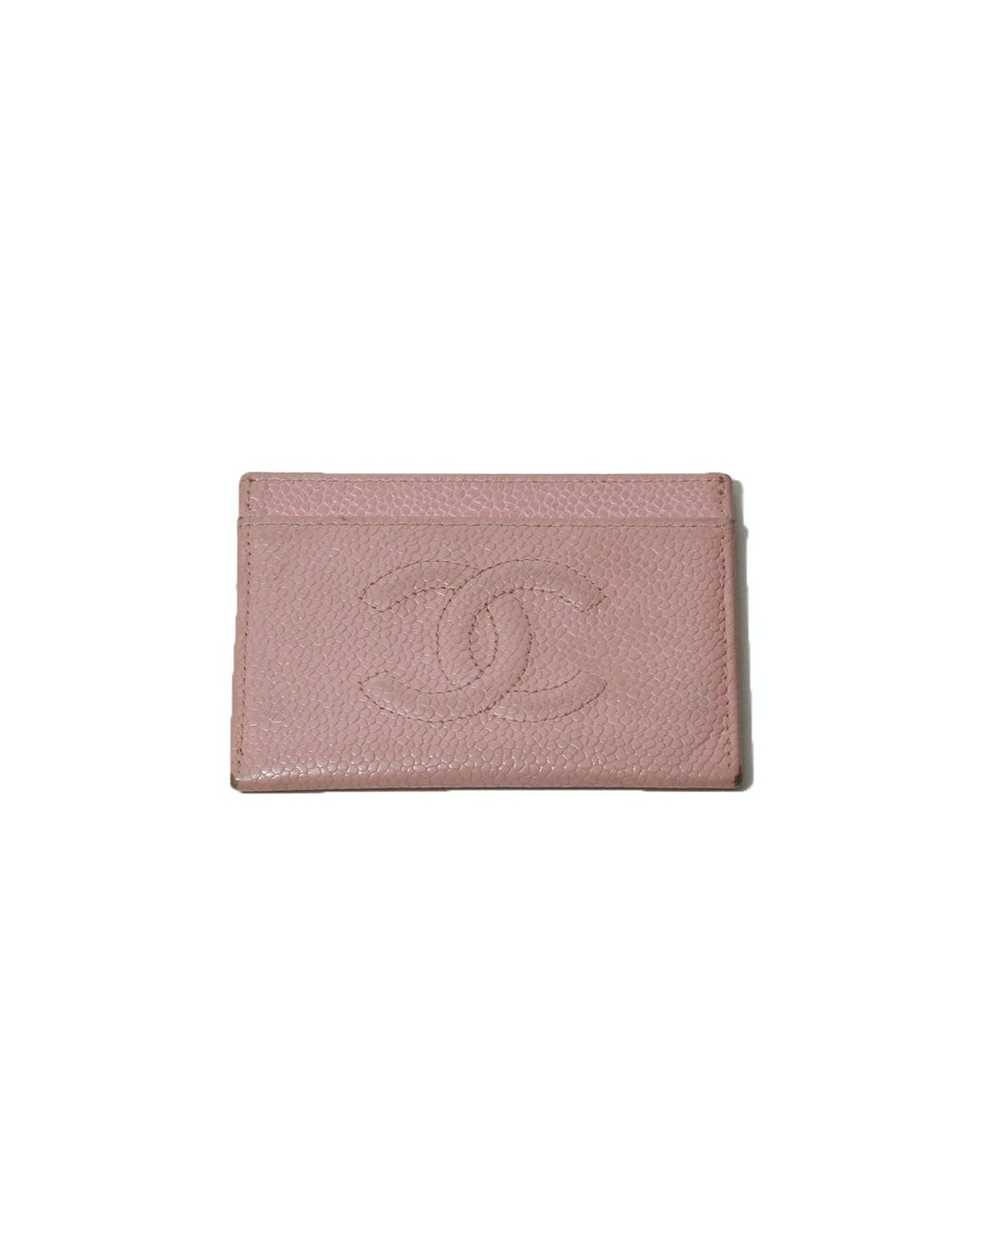 Chanel Chanel Card Holder - image 1